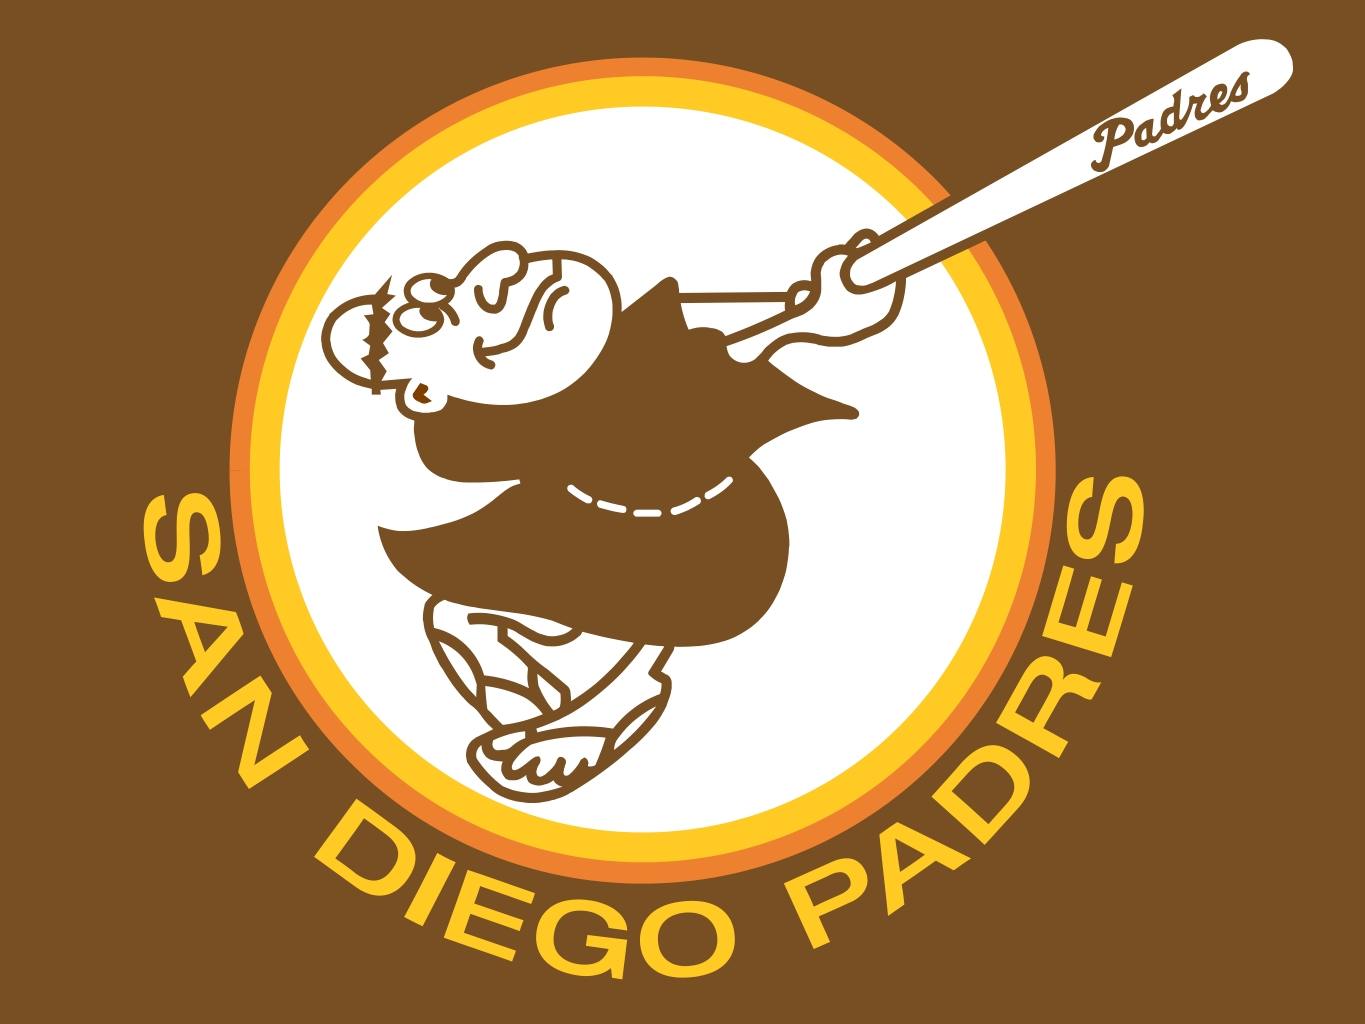 Mens San Diego Padres Throwback Jerseys, Padres Retro & Vintage Throwback  Uniforms